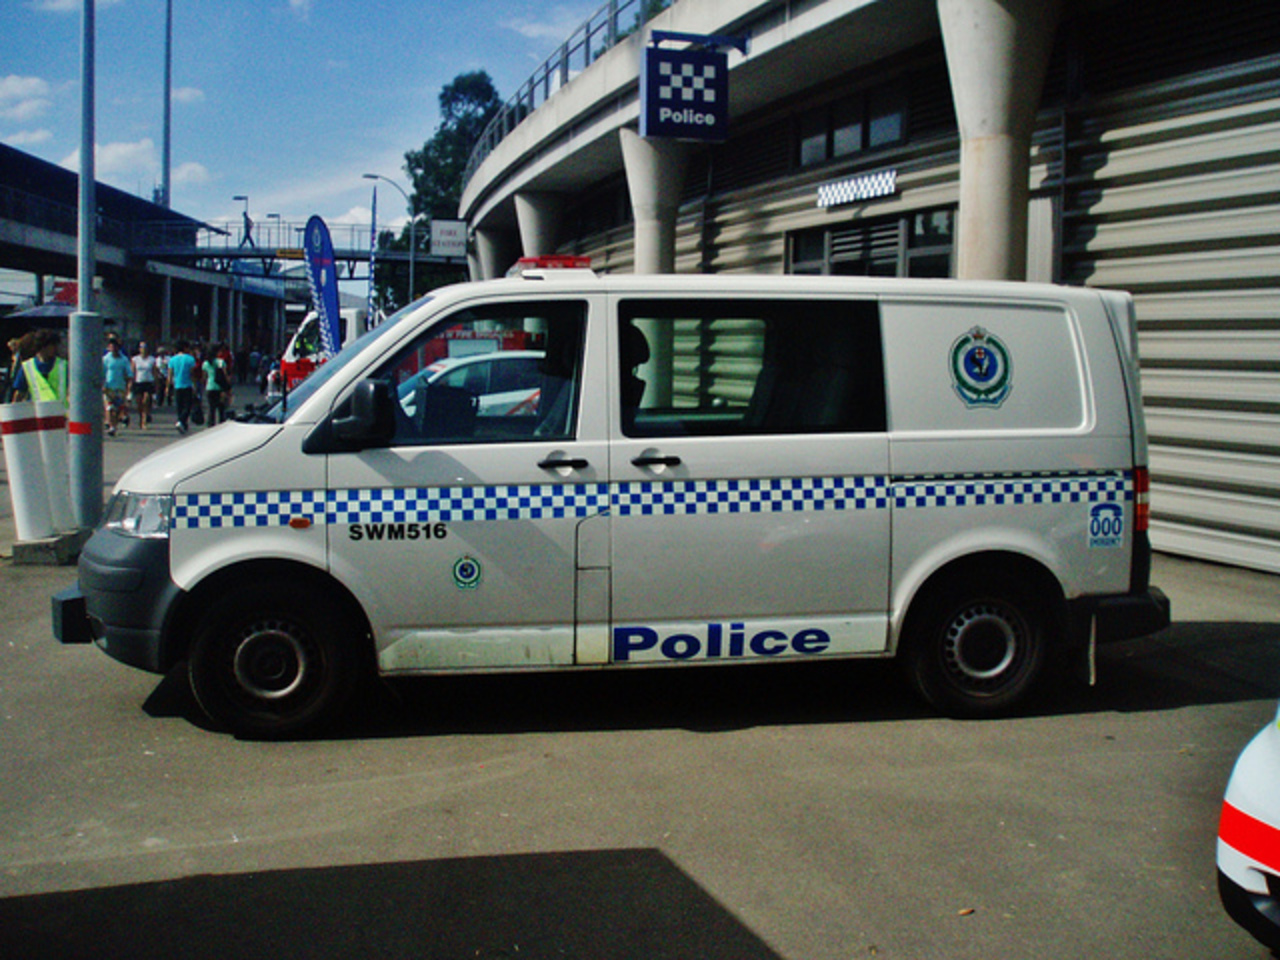 2005 Volkswagen T5 Transporter paddy wagon - NSW Police | Flickr ...